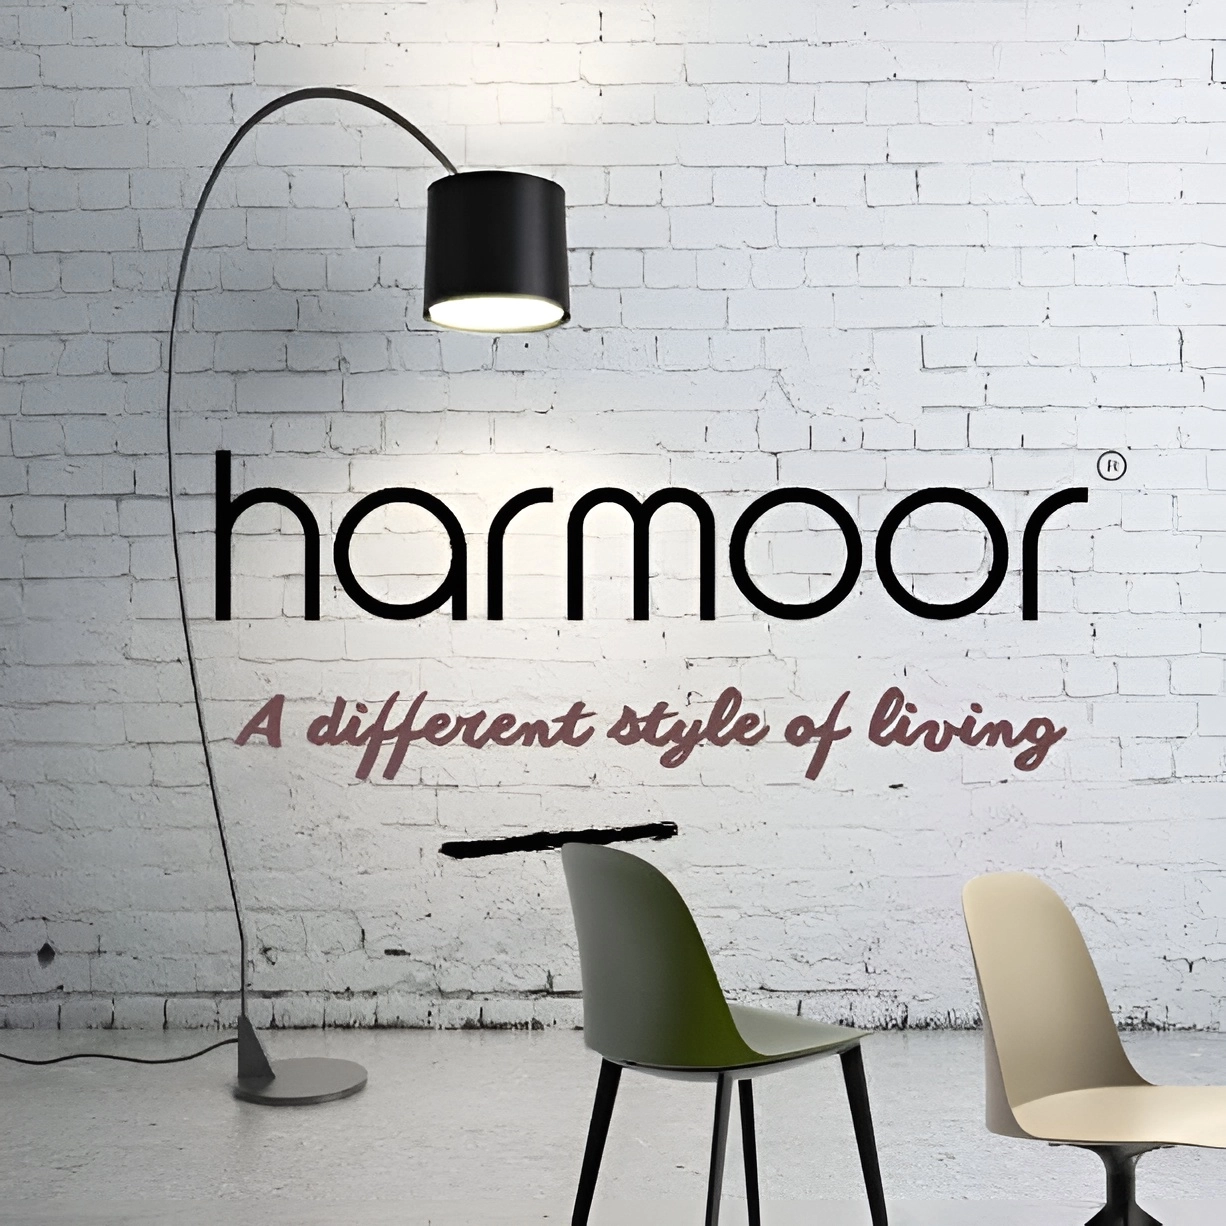 harmoor-furniture